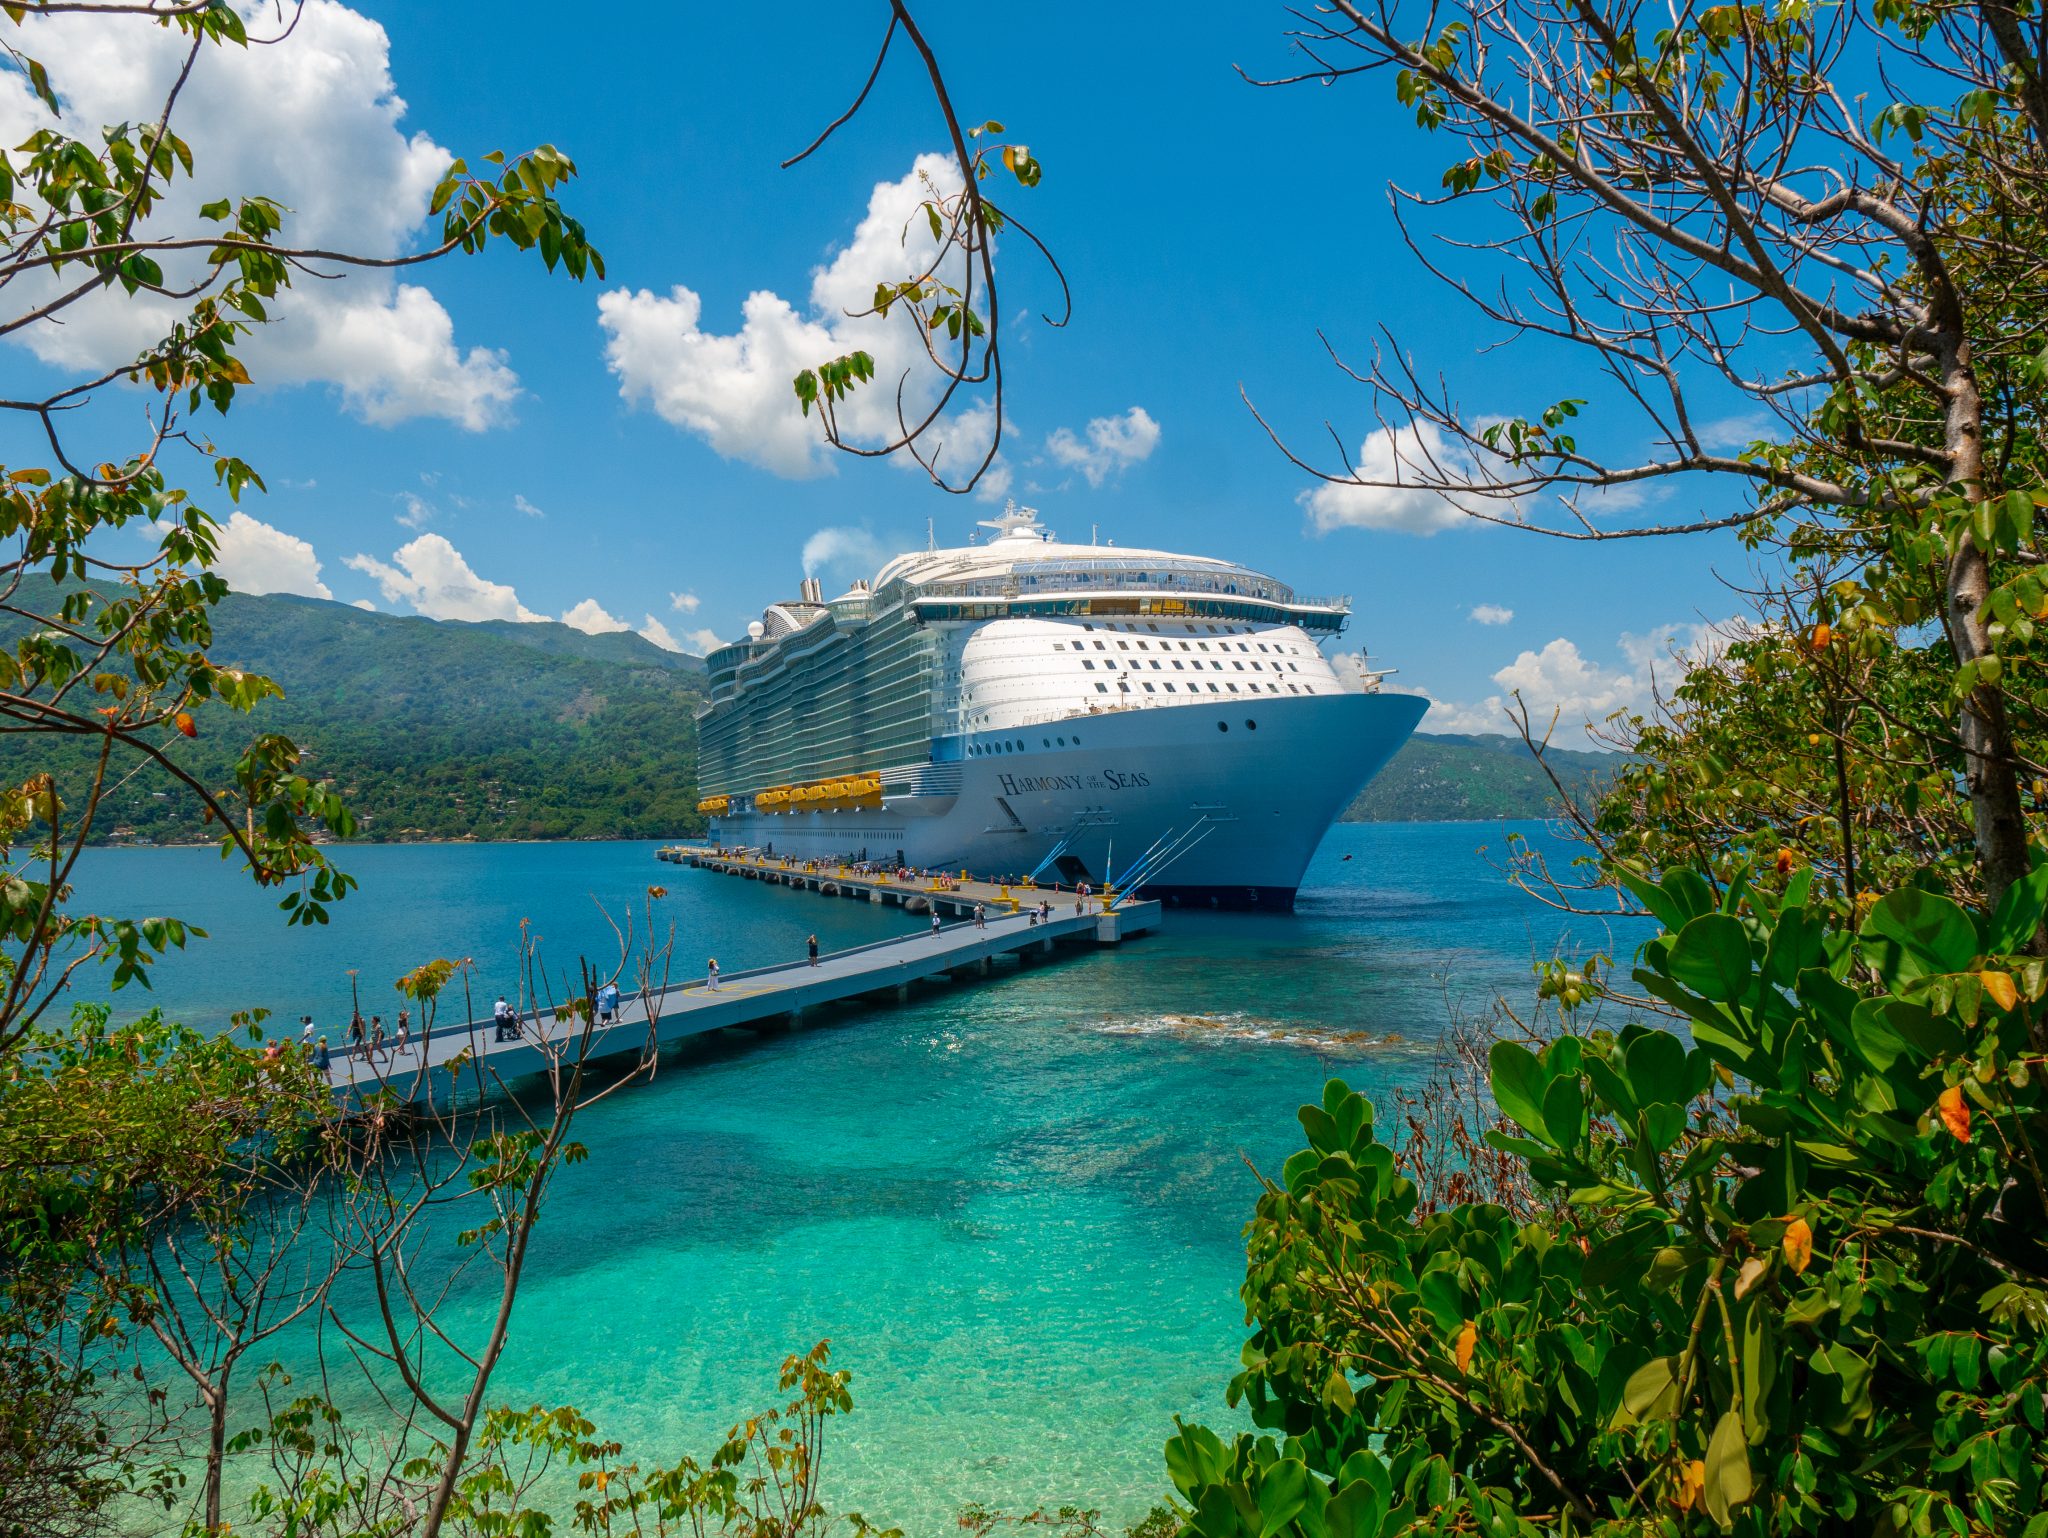 Cruise ship docked in Labadee, Haiti